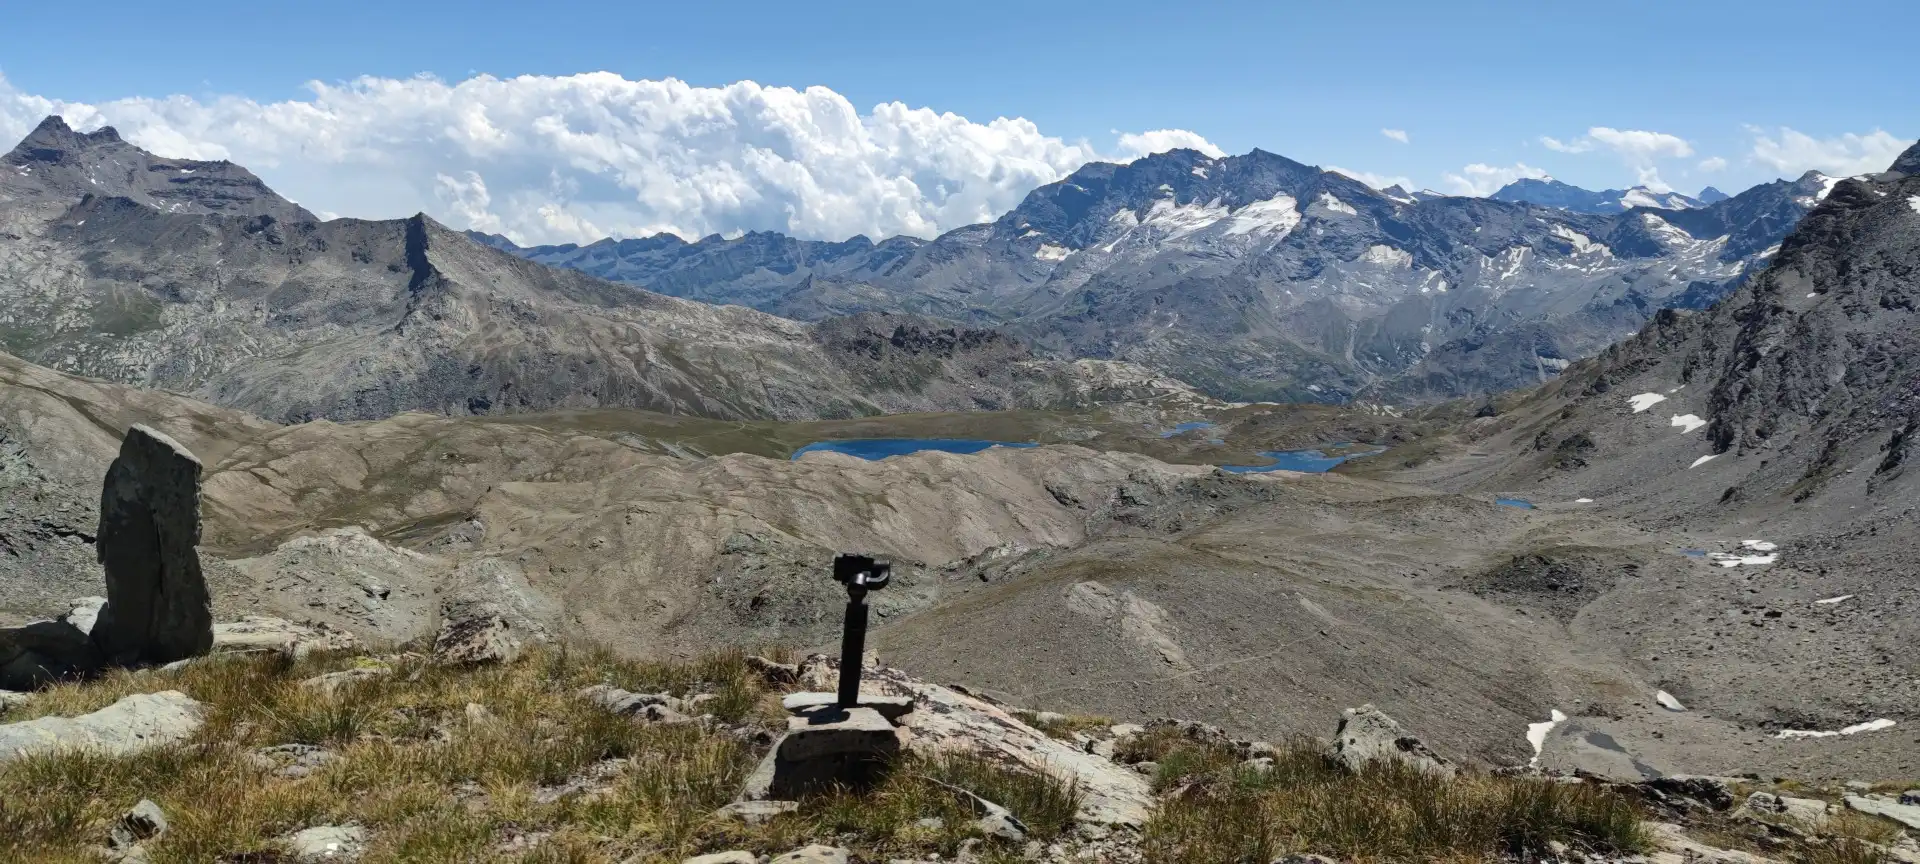 VLog - Estate 2023 - Trekking al Colle Rosset (3100mt), Parco del Gran Paradiso